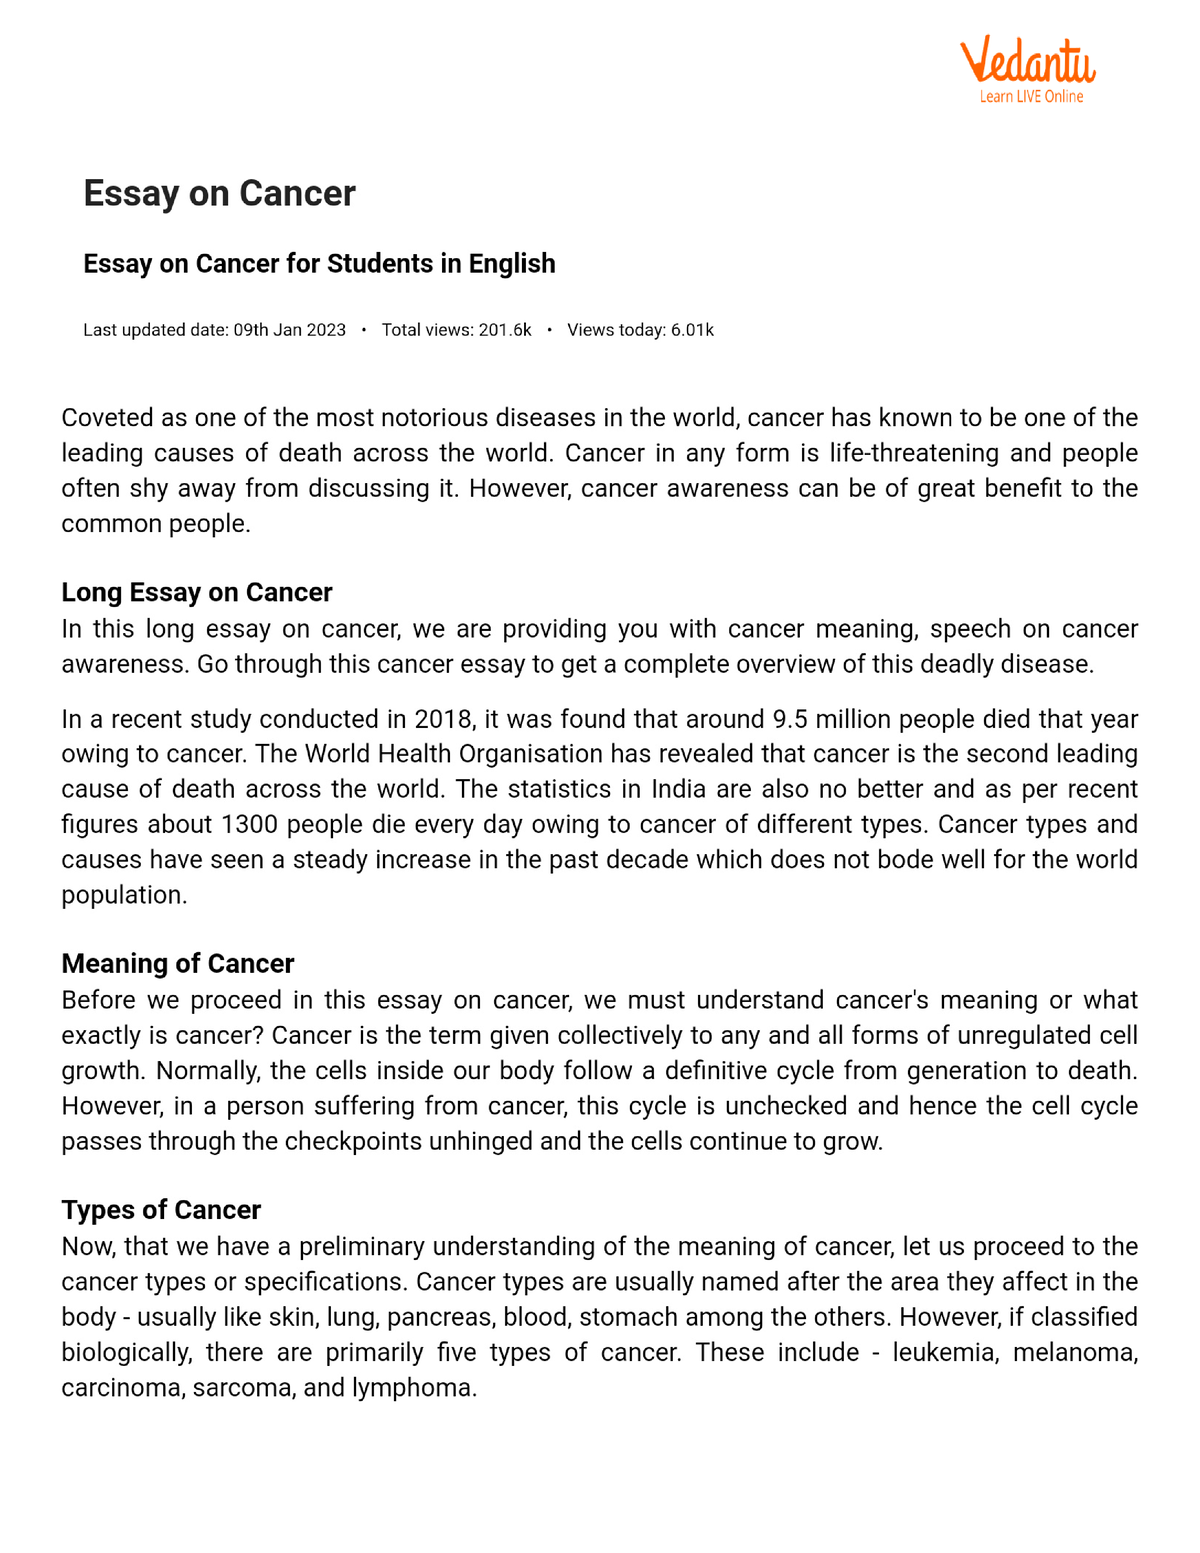 write an essay on cancer